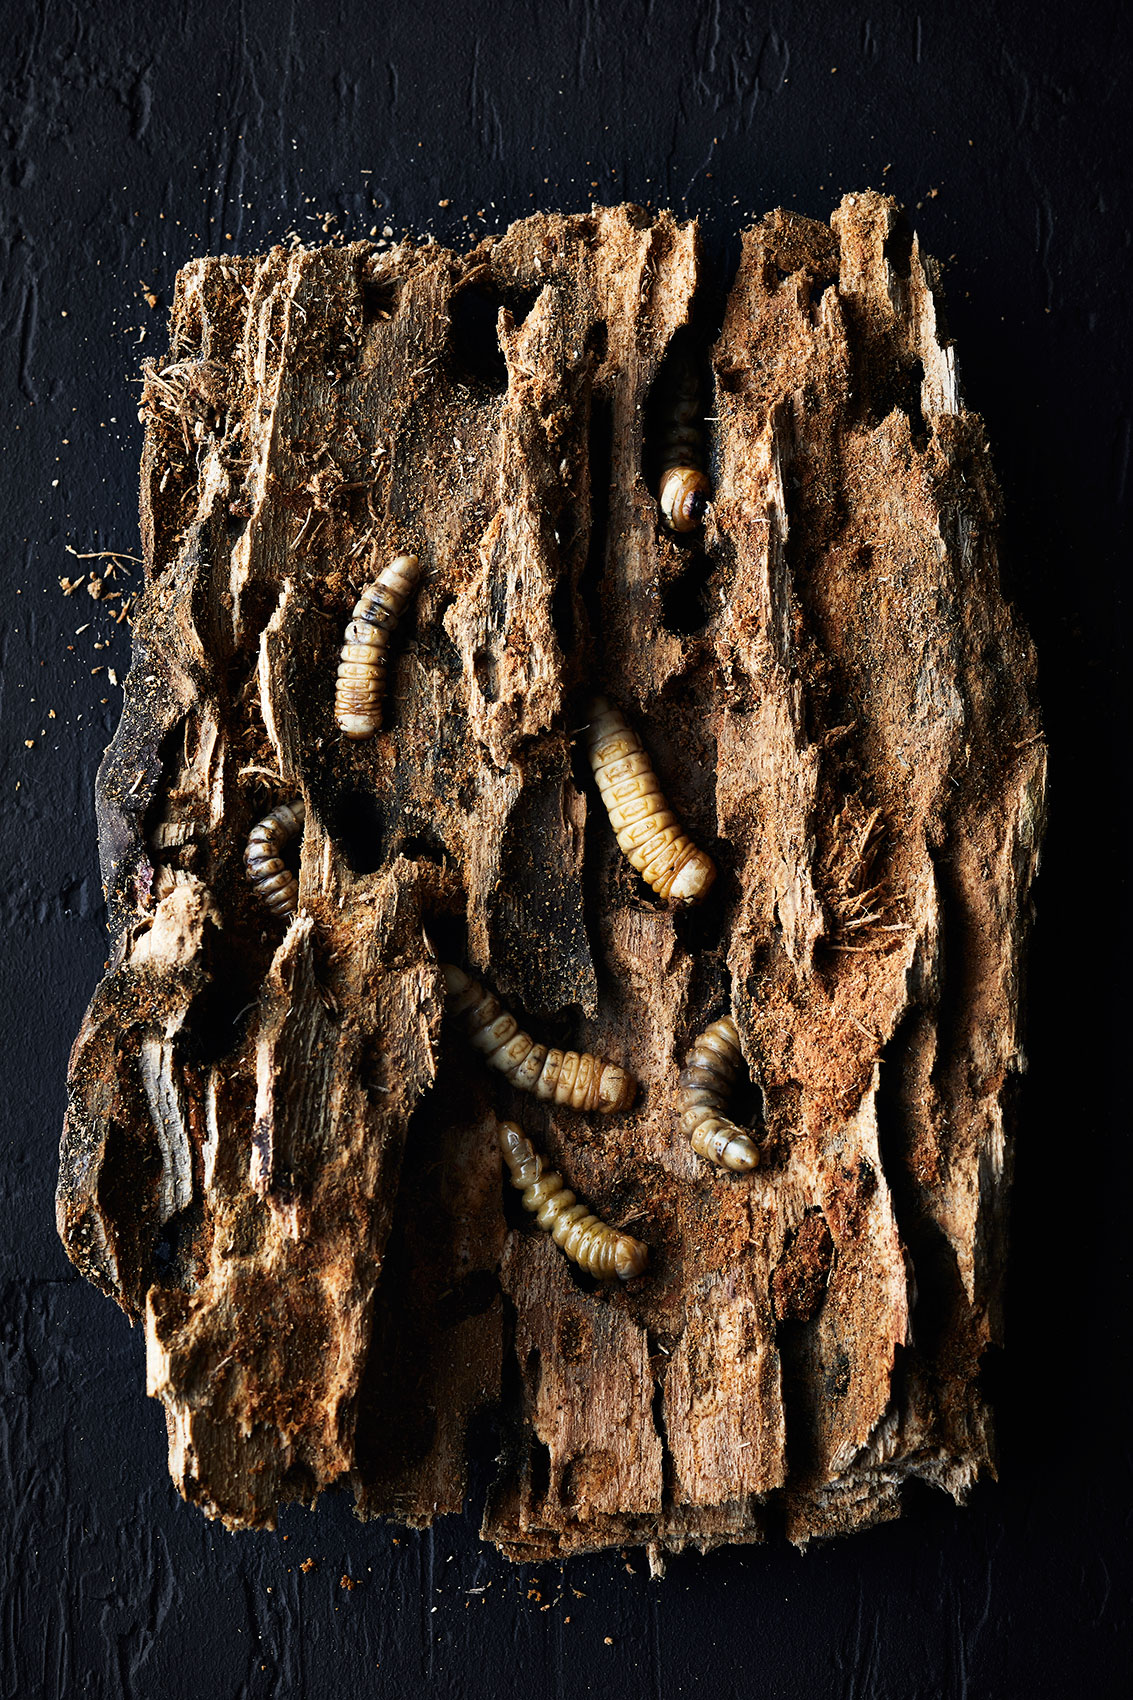 NZ Native Huhu Grubs on Decayed Log • Hiakai • Lifestyle  & Food Photography